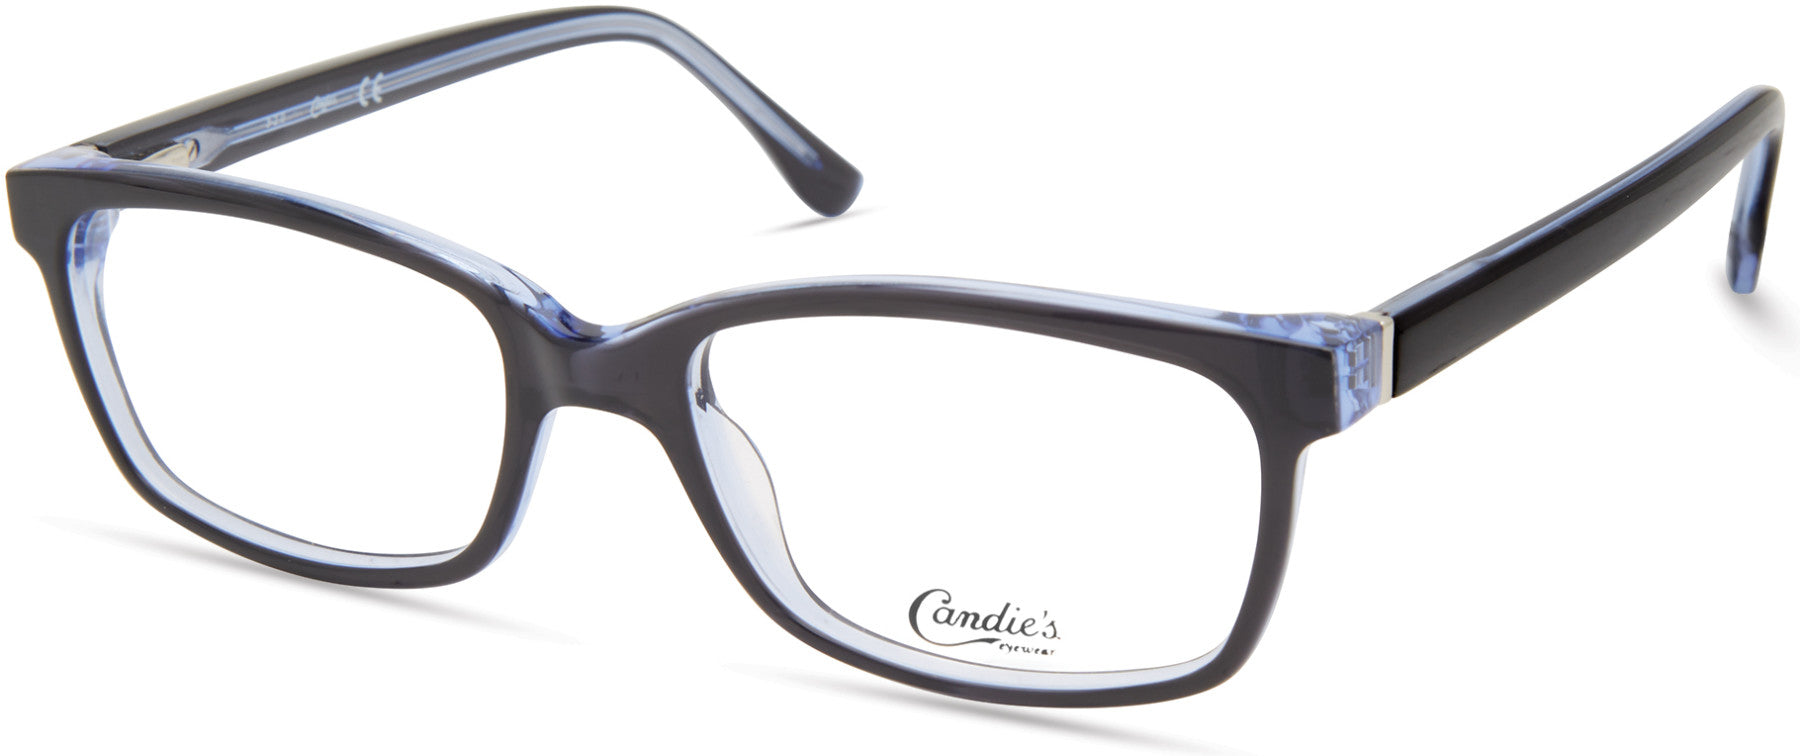 Candies CA0199 Rectangular Eyeglasses 005-005 - Black